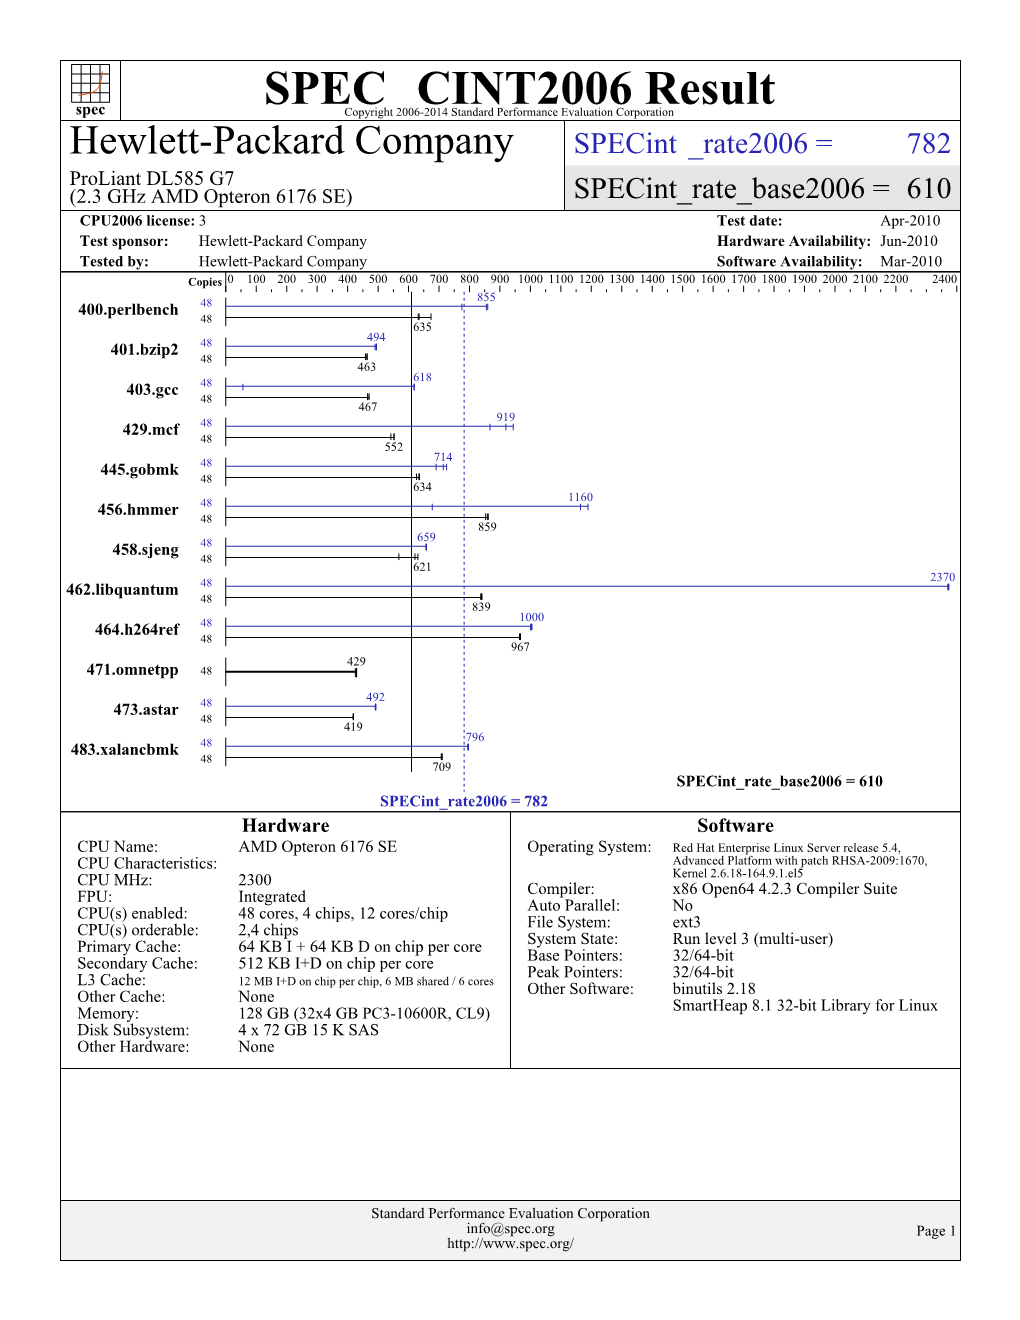 Hewlett-Packard Company: Proliant DL585 G7 (2.3 Ghz AMD Opteron 6176